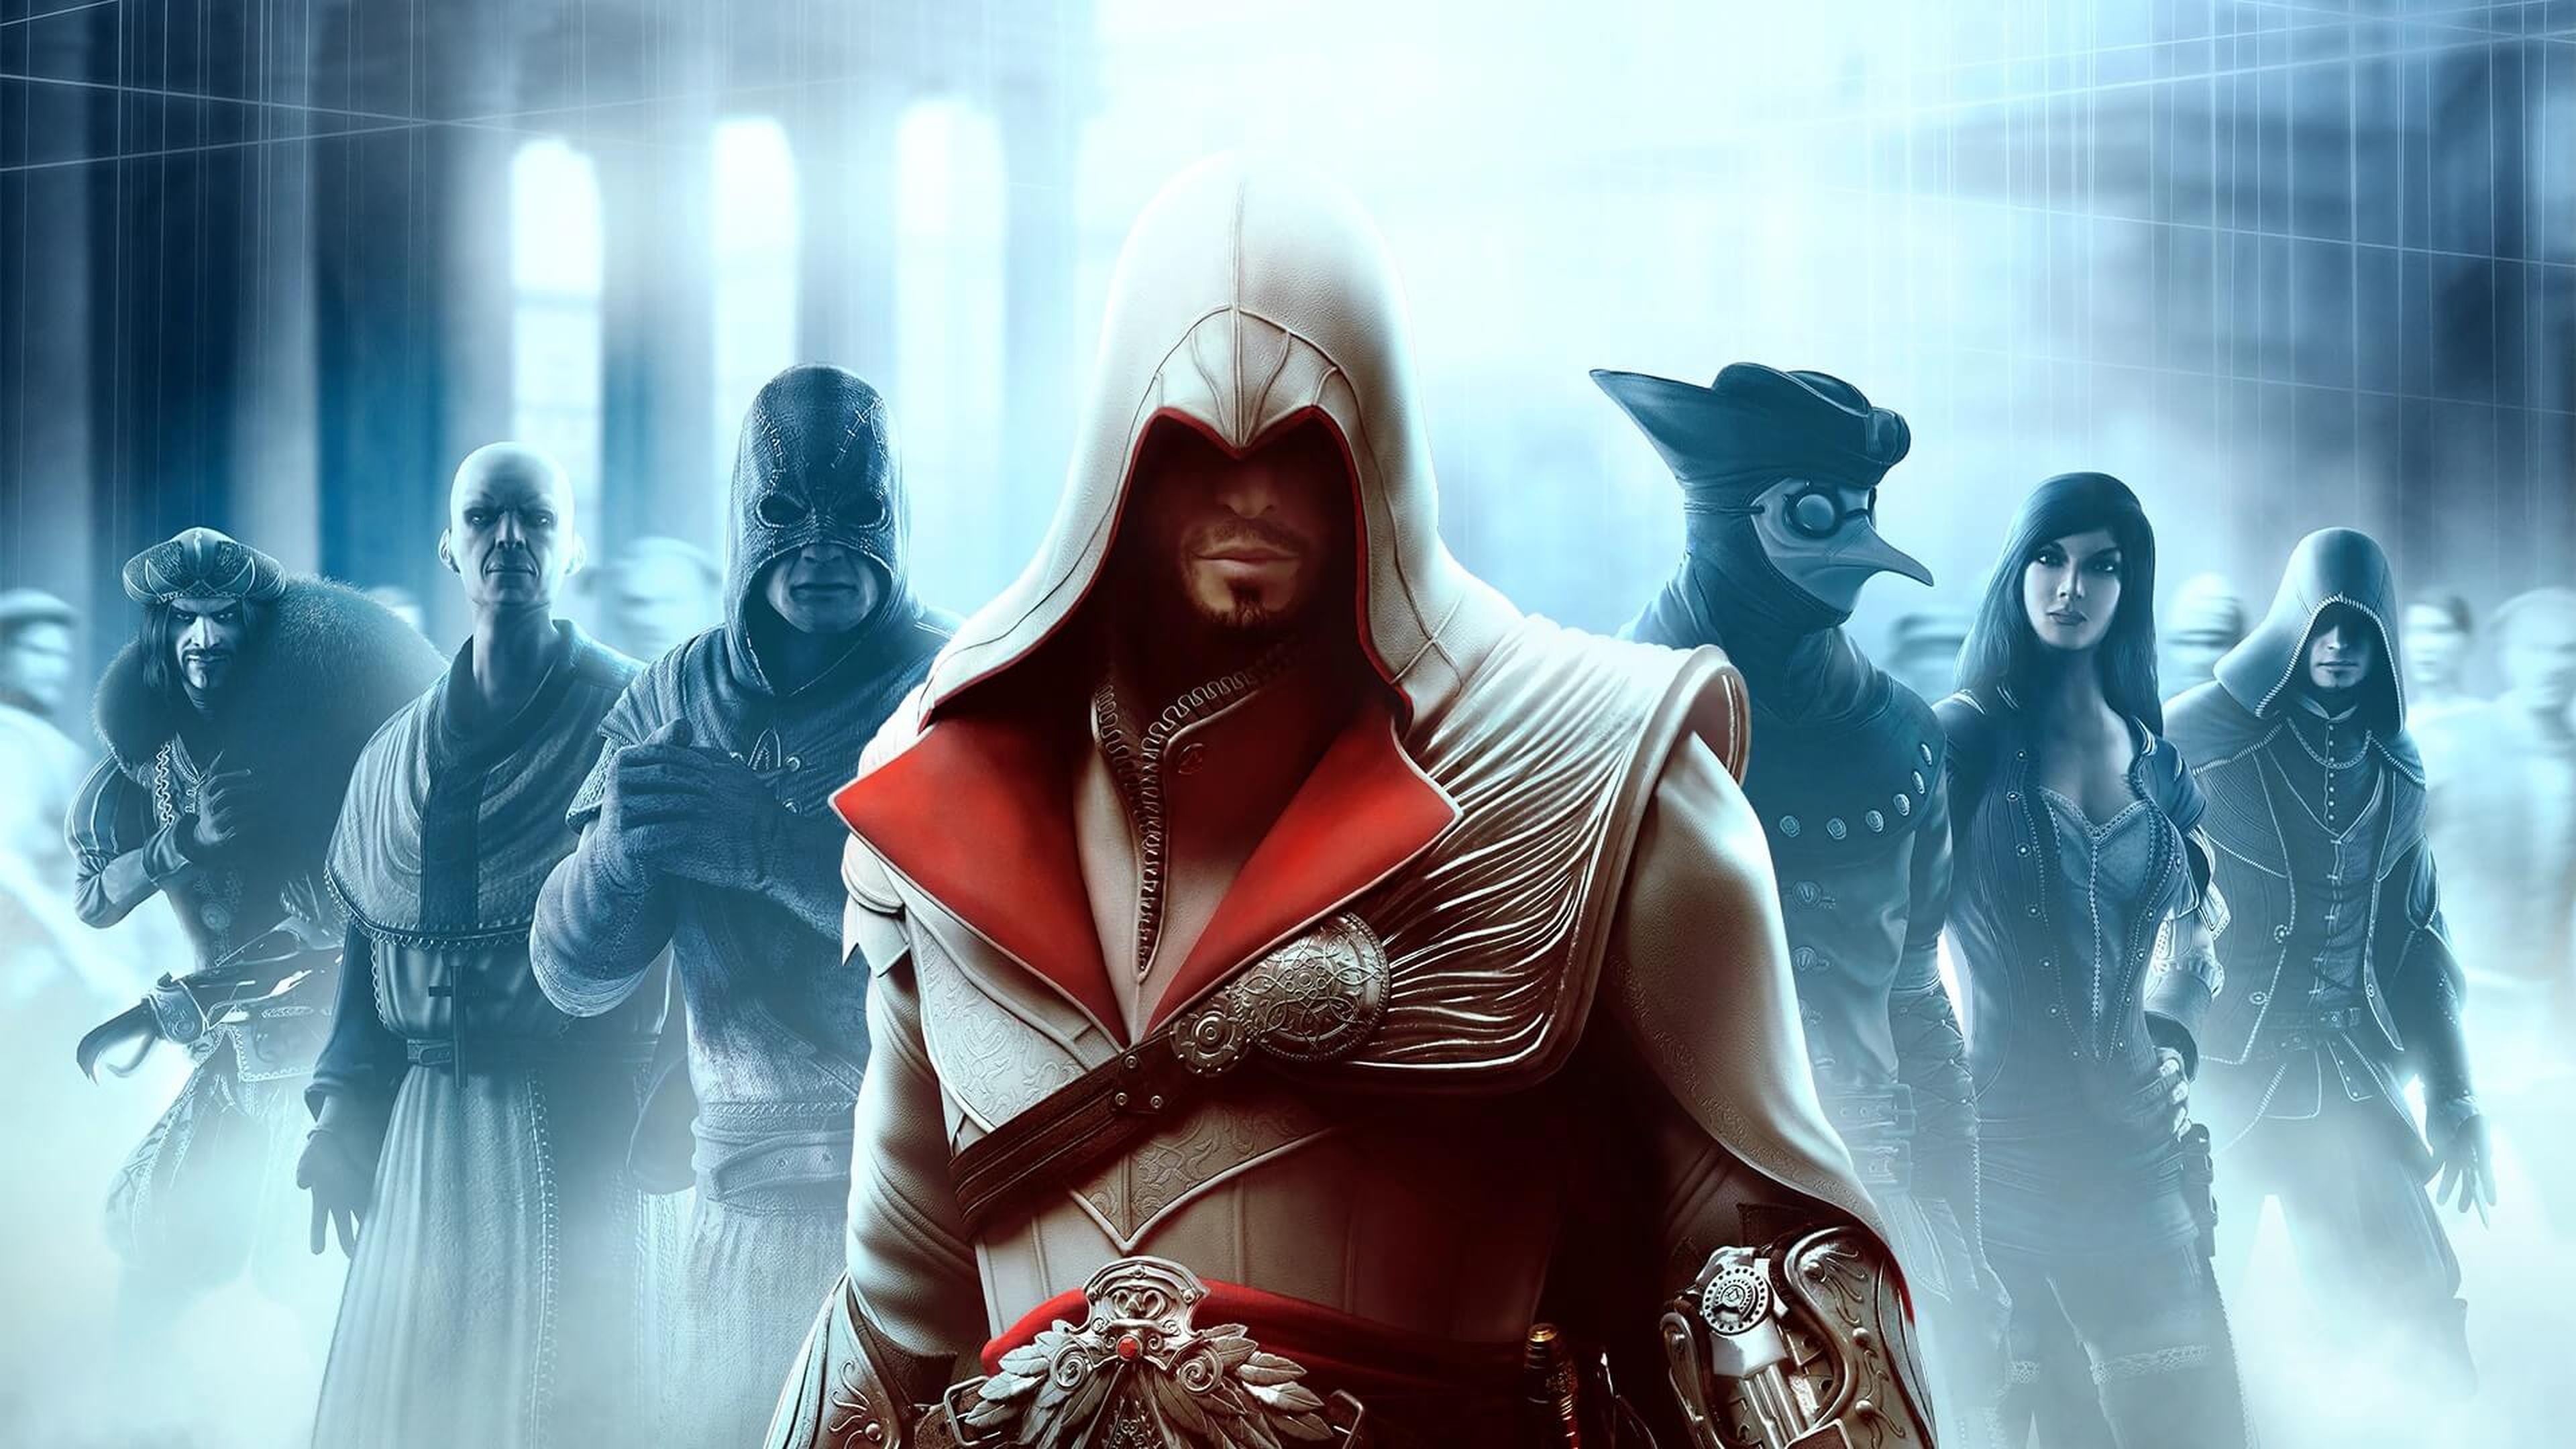 Assassin's Creed La Hermandad